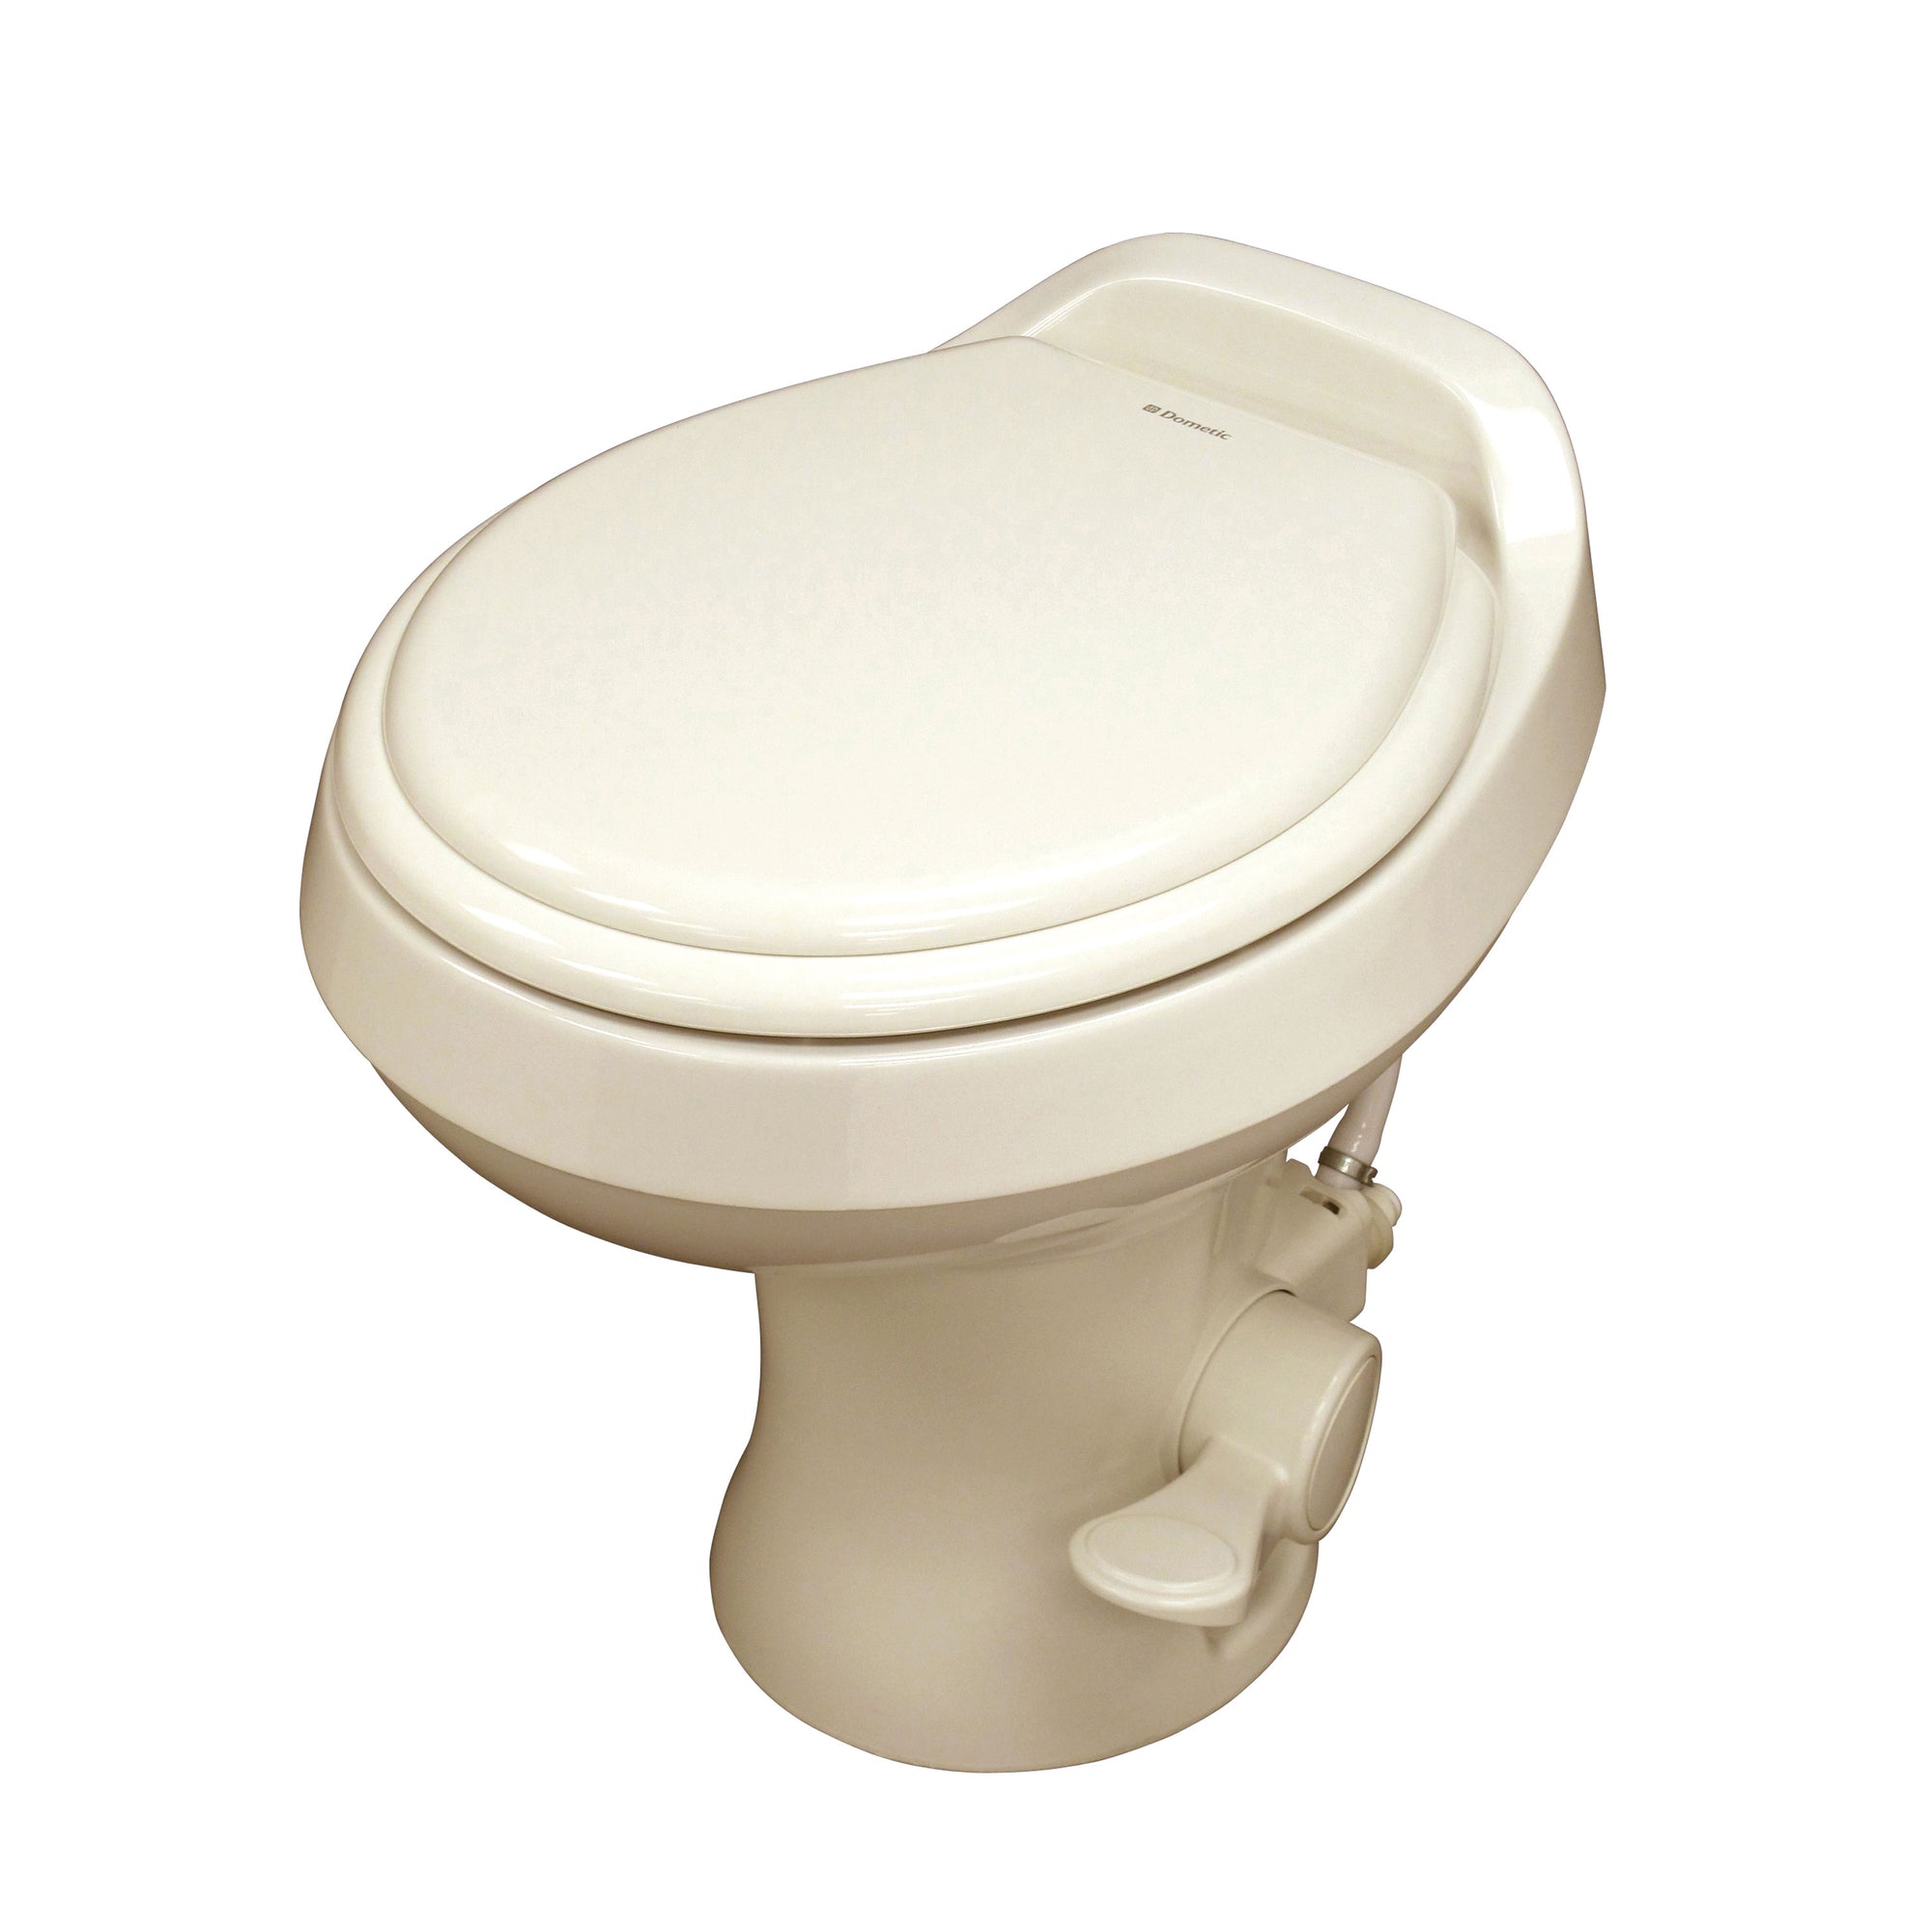 Dometic 302300173 ReVolution 300 Series RV Toilet with Hand Spray - Bone